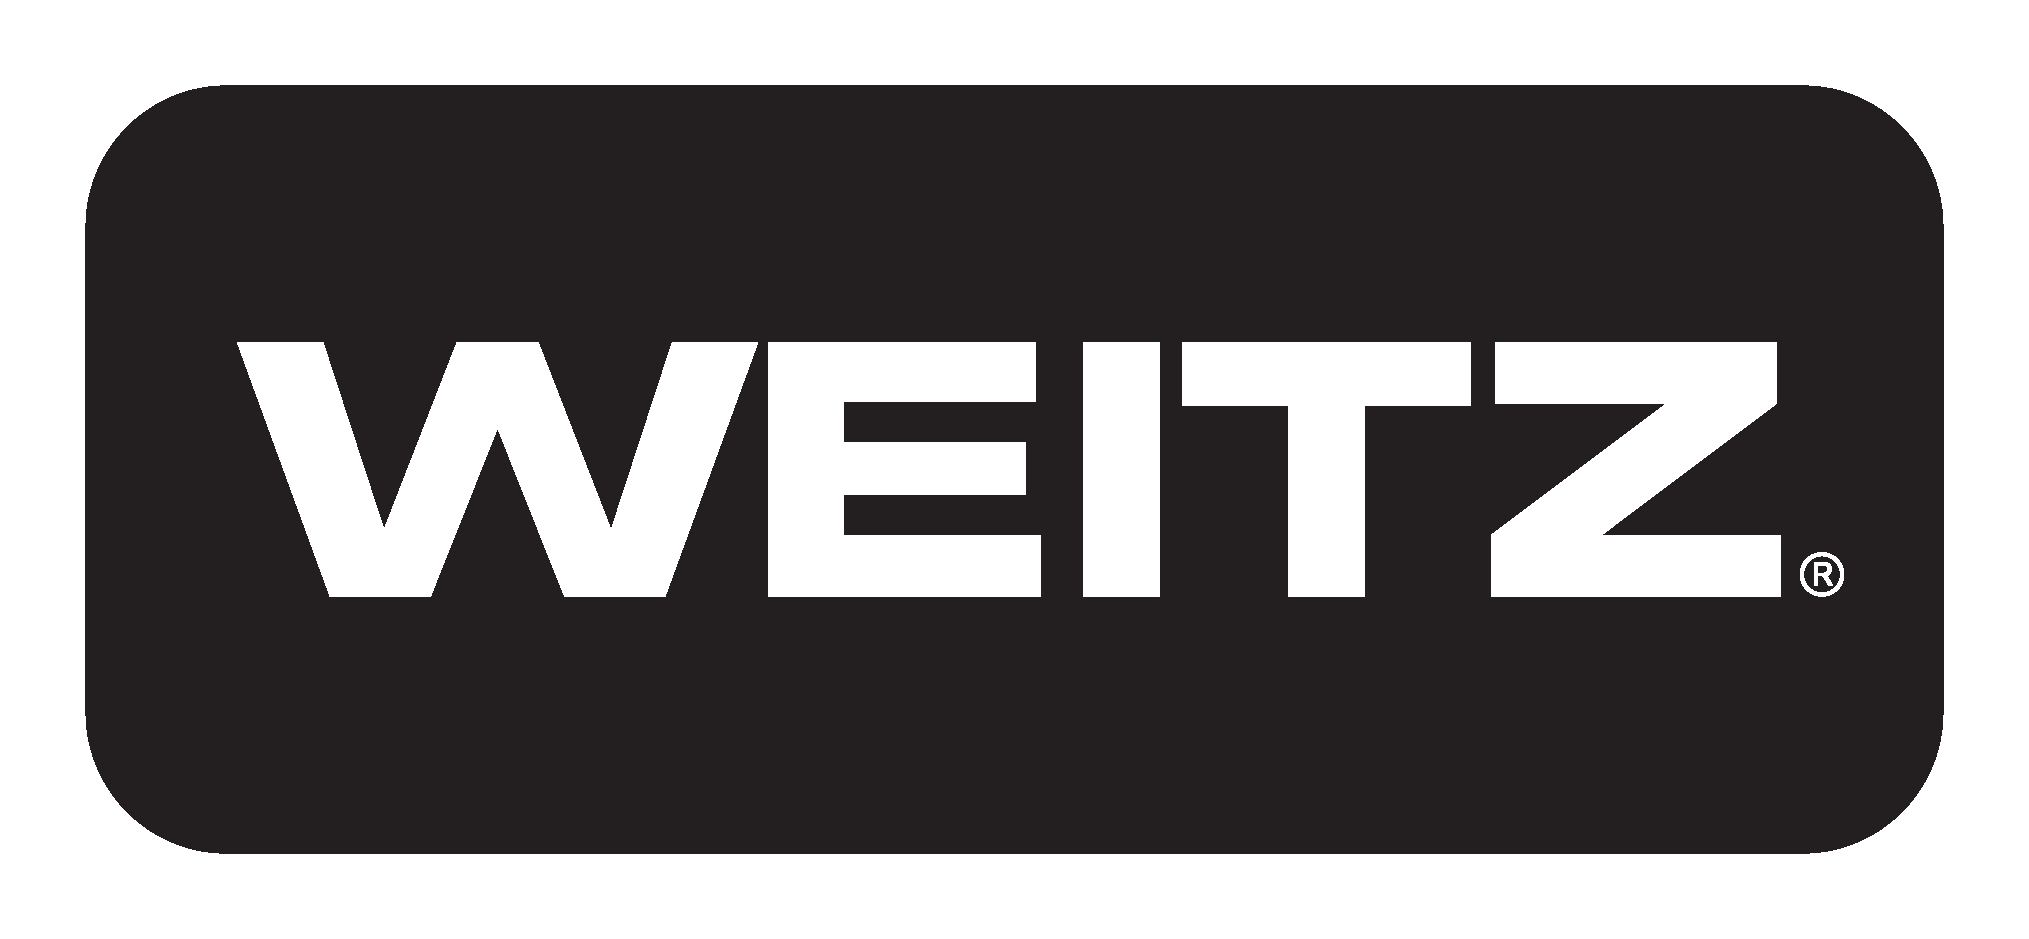 The Weitz Company